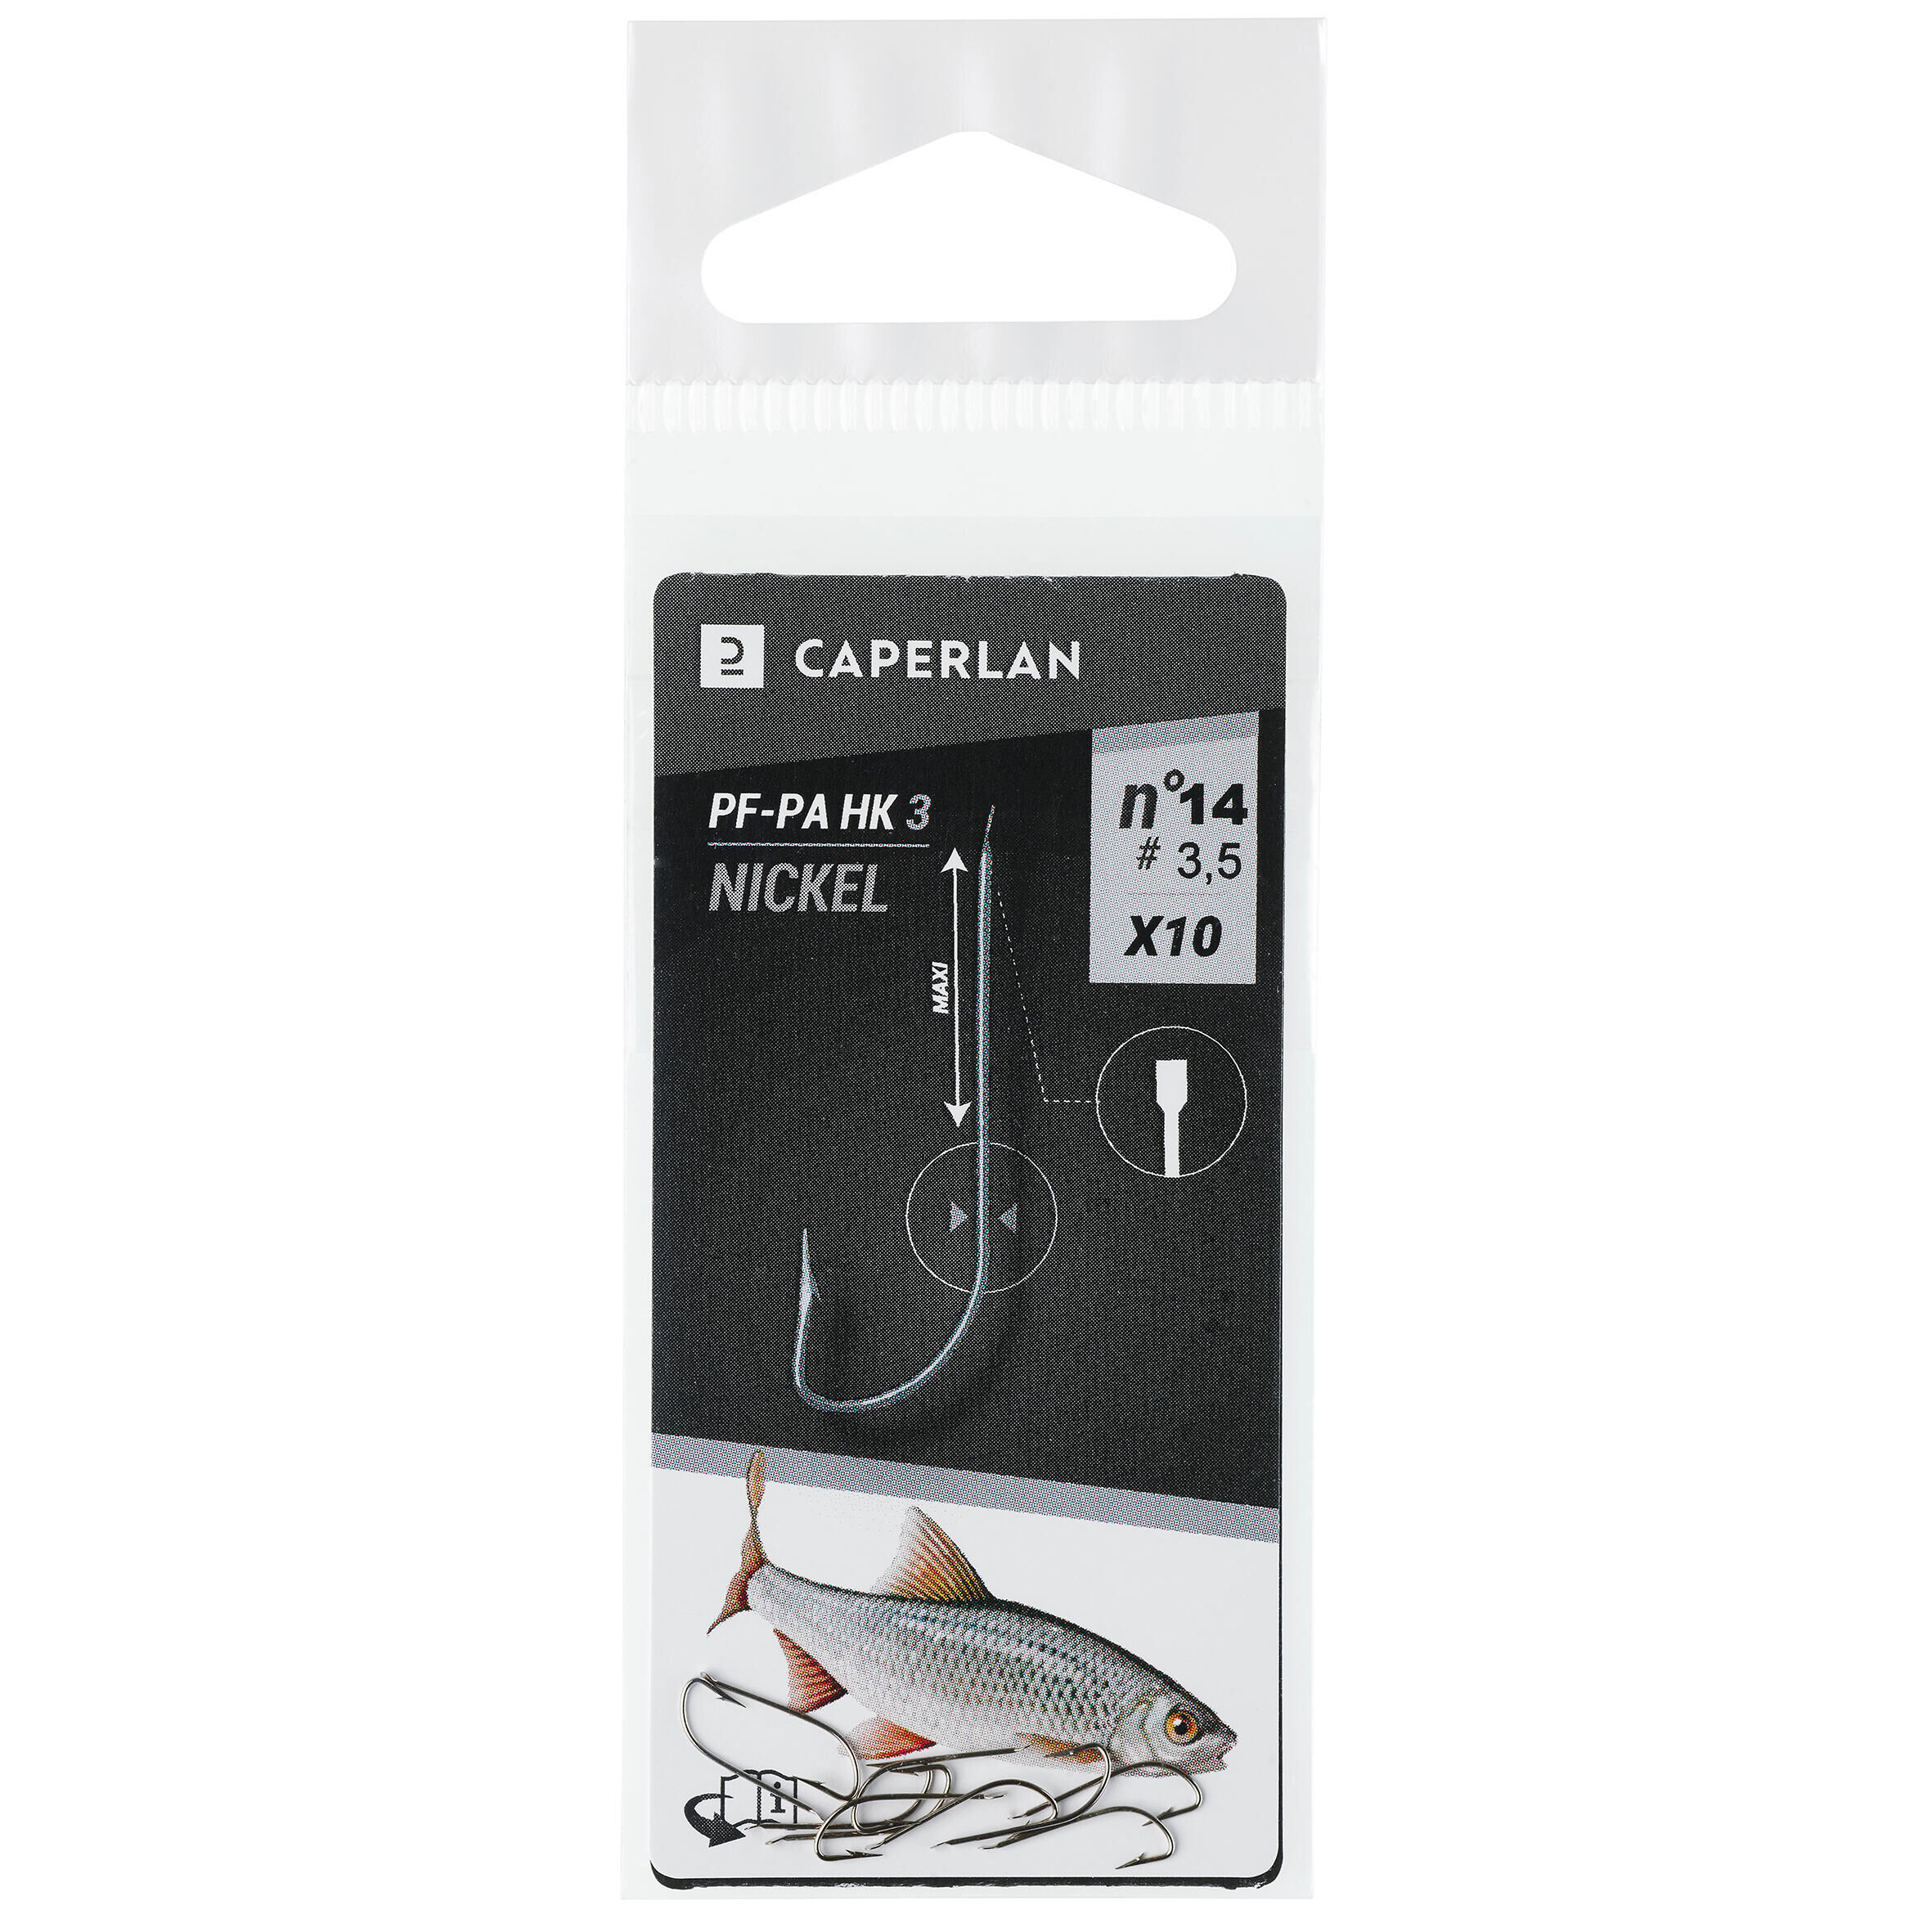 CAPERLAN SINGLE NICKEL UNMOUNTED HOOK PA HK 3 X 10  FOR STILL FISHING